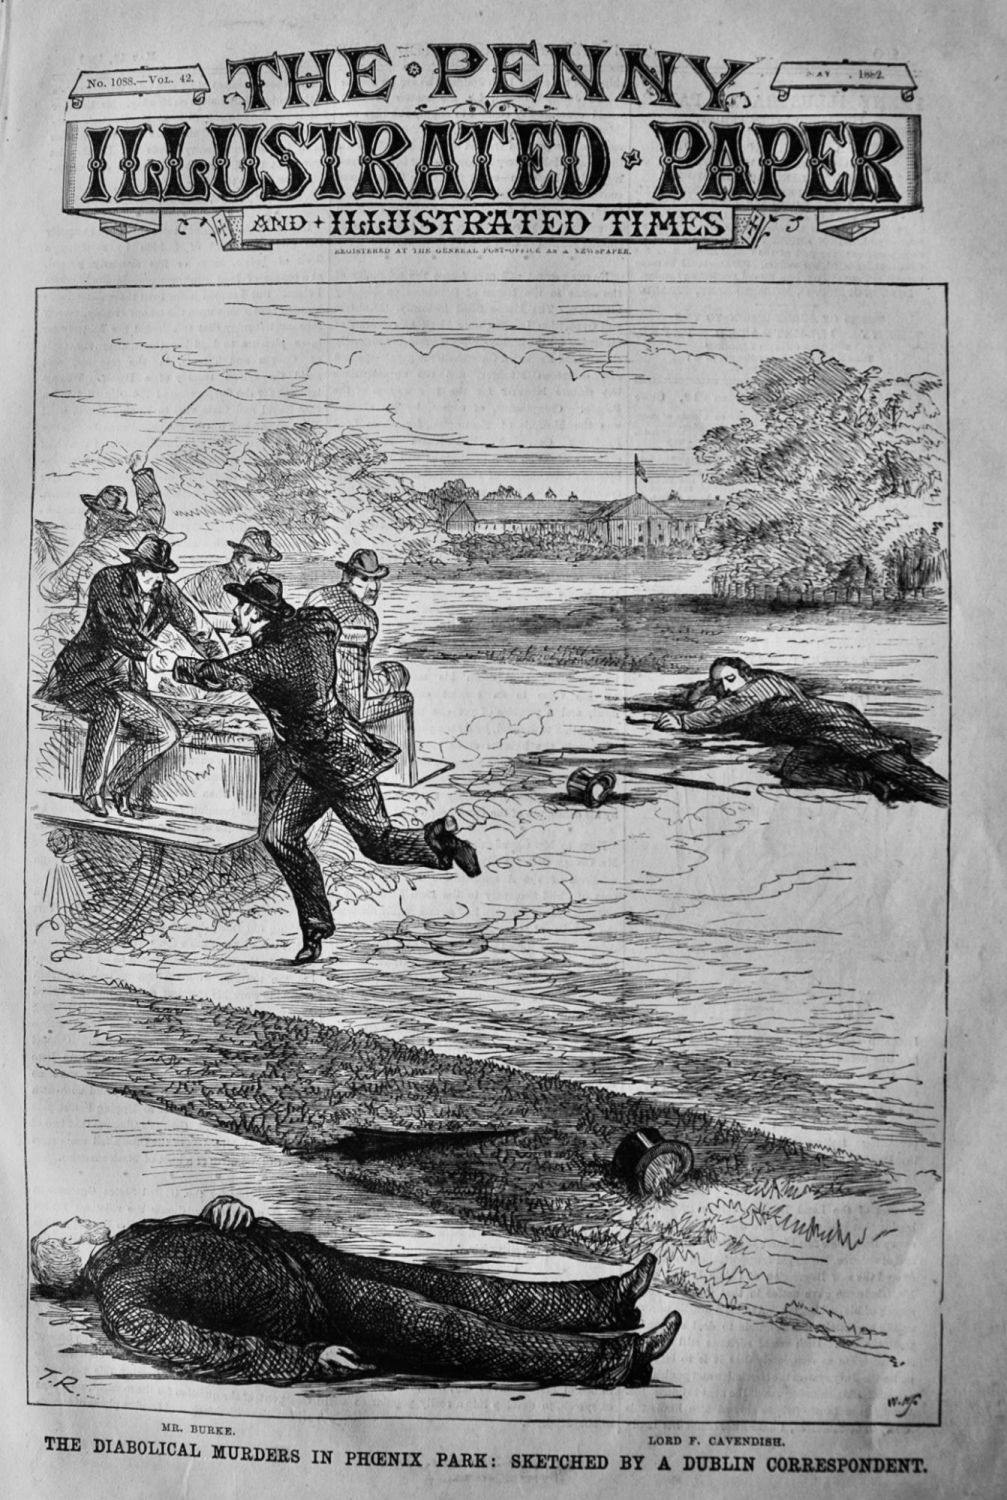 The Diabolical Murders in Phoenix Park.  1882.